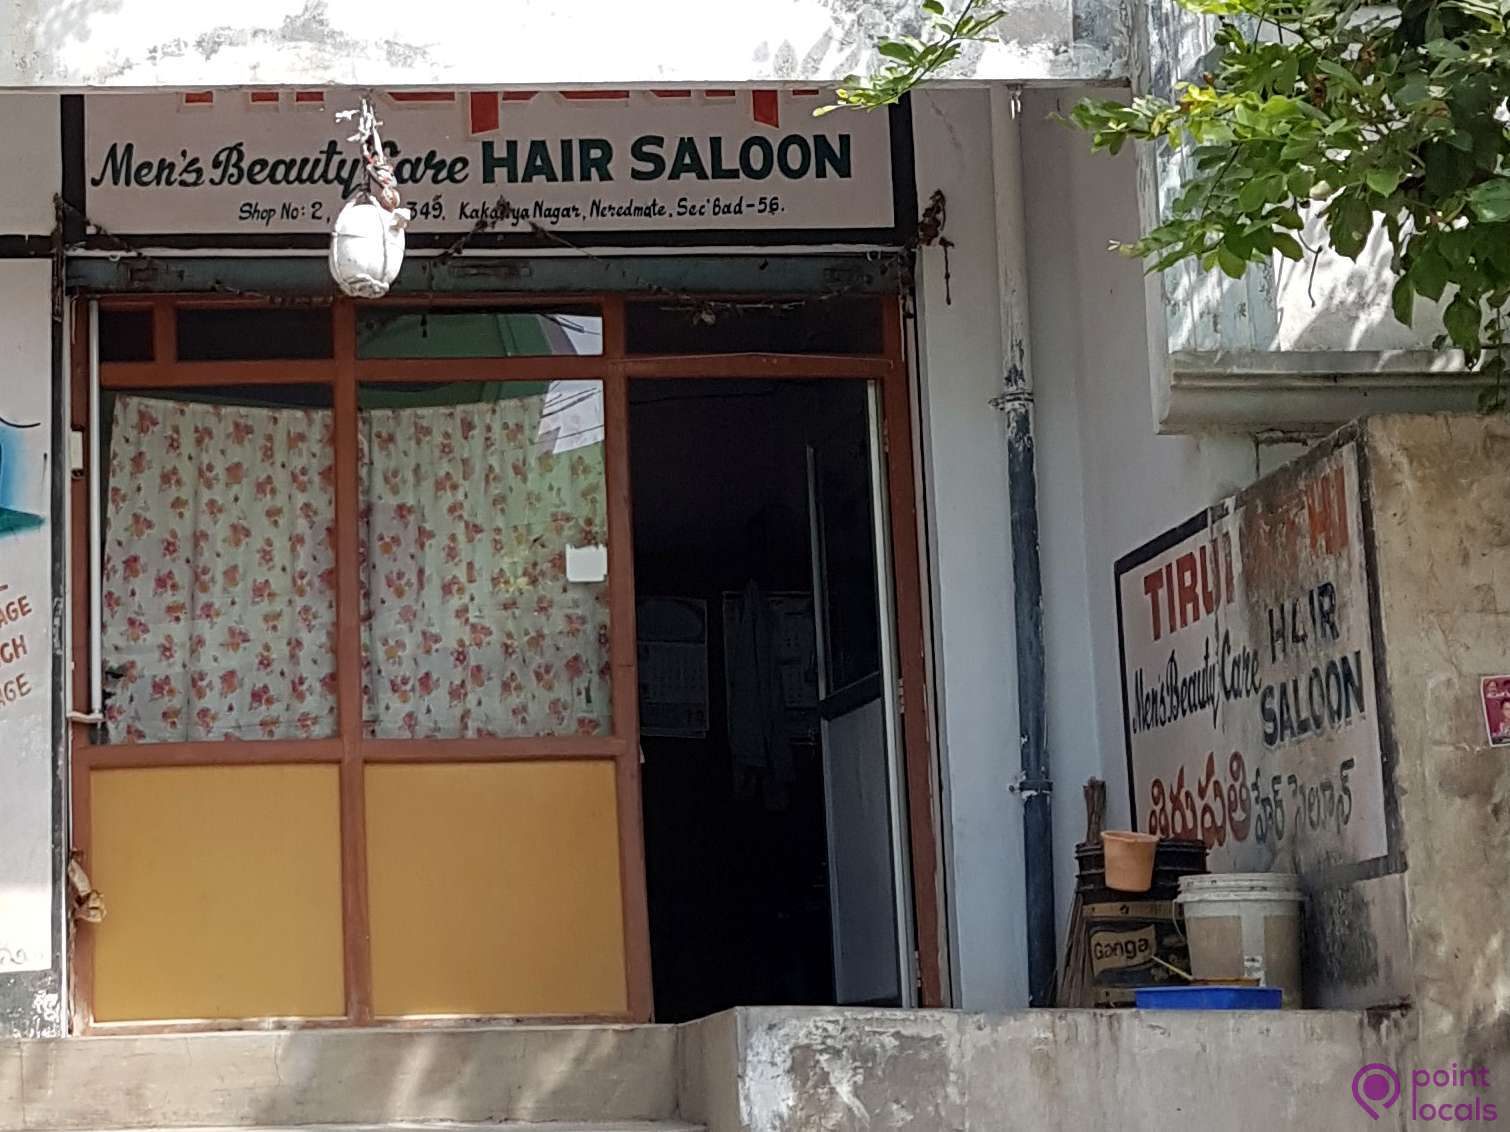 Tirupati Hair Saloon - Mens Hair Salon in Secunderabad,Telangana |  Pointlocals